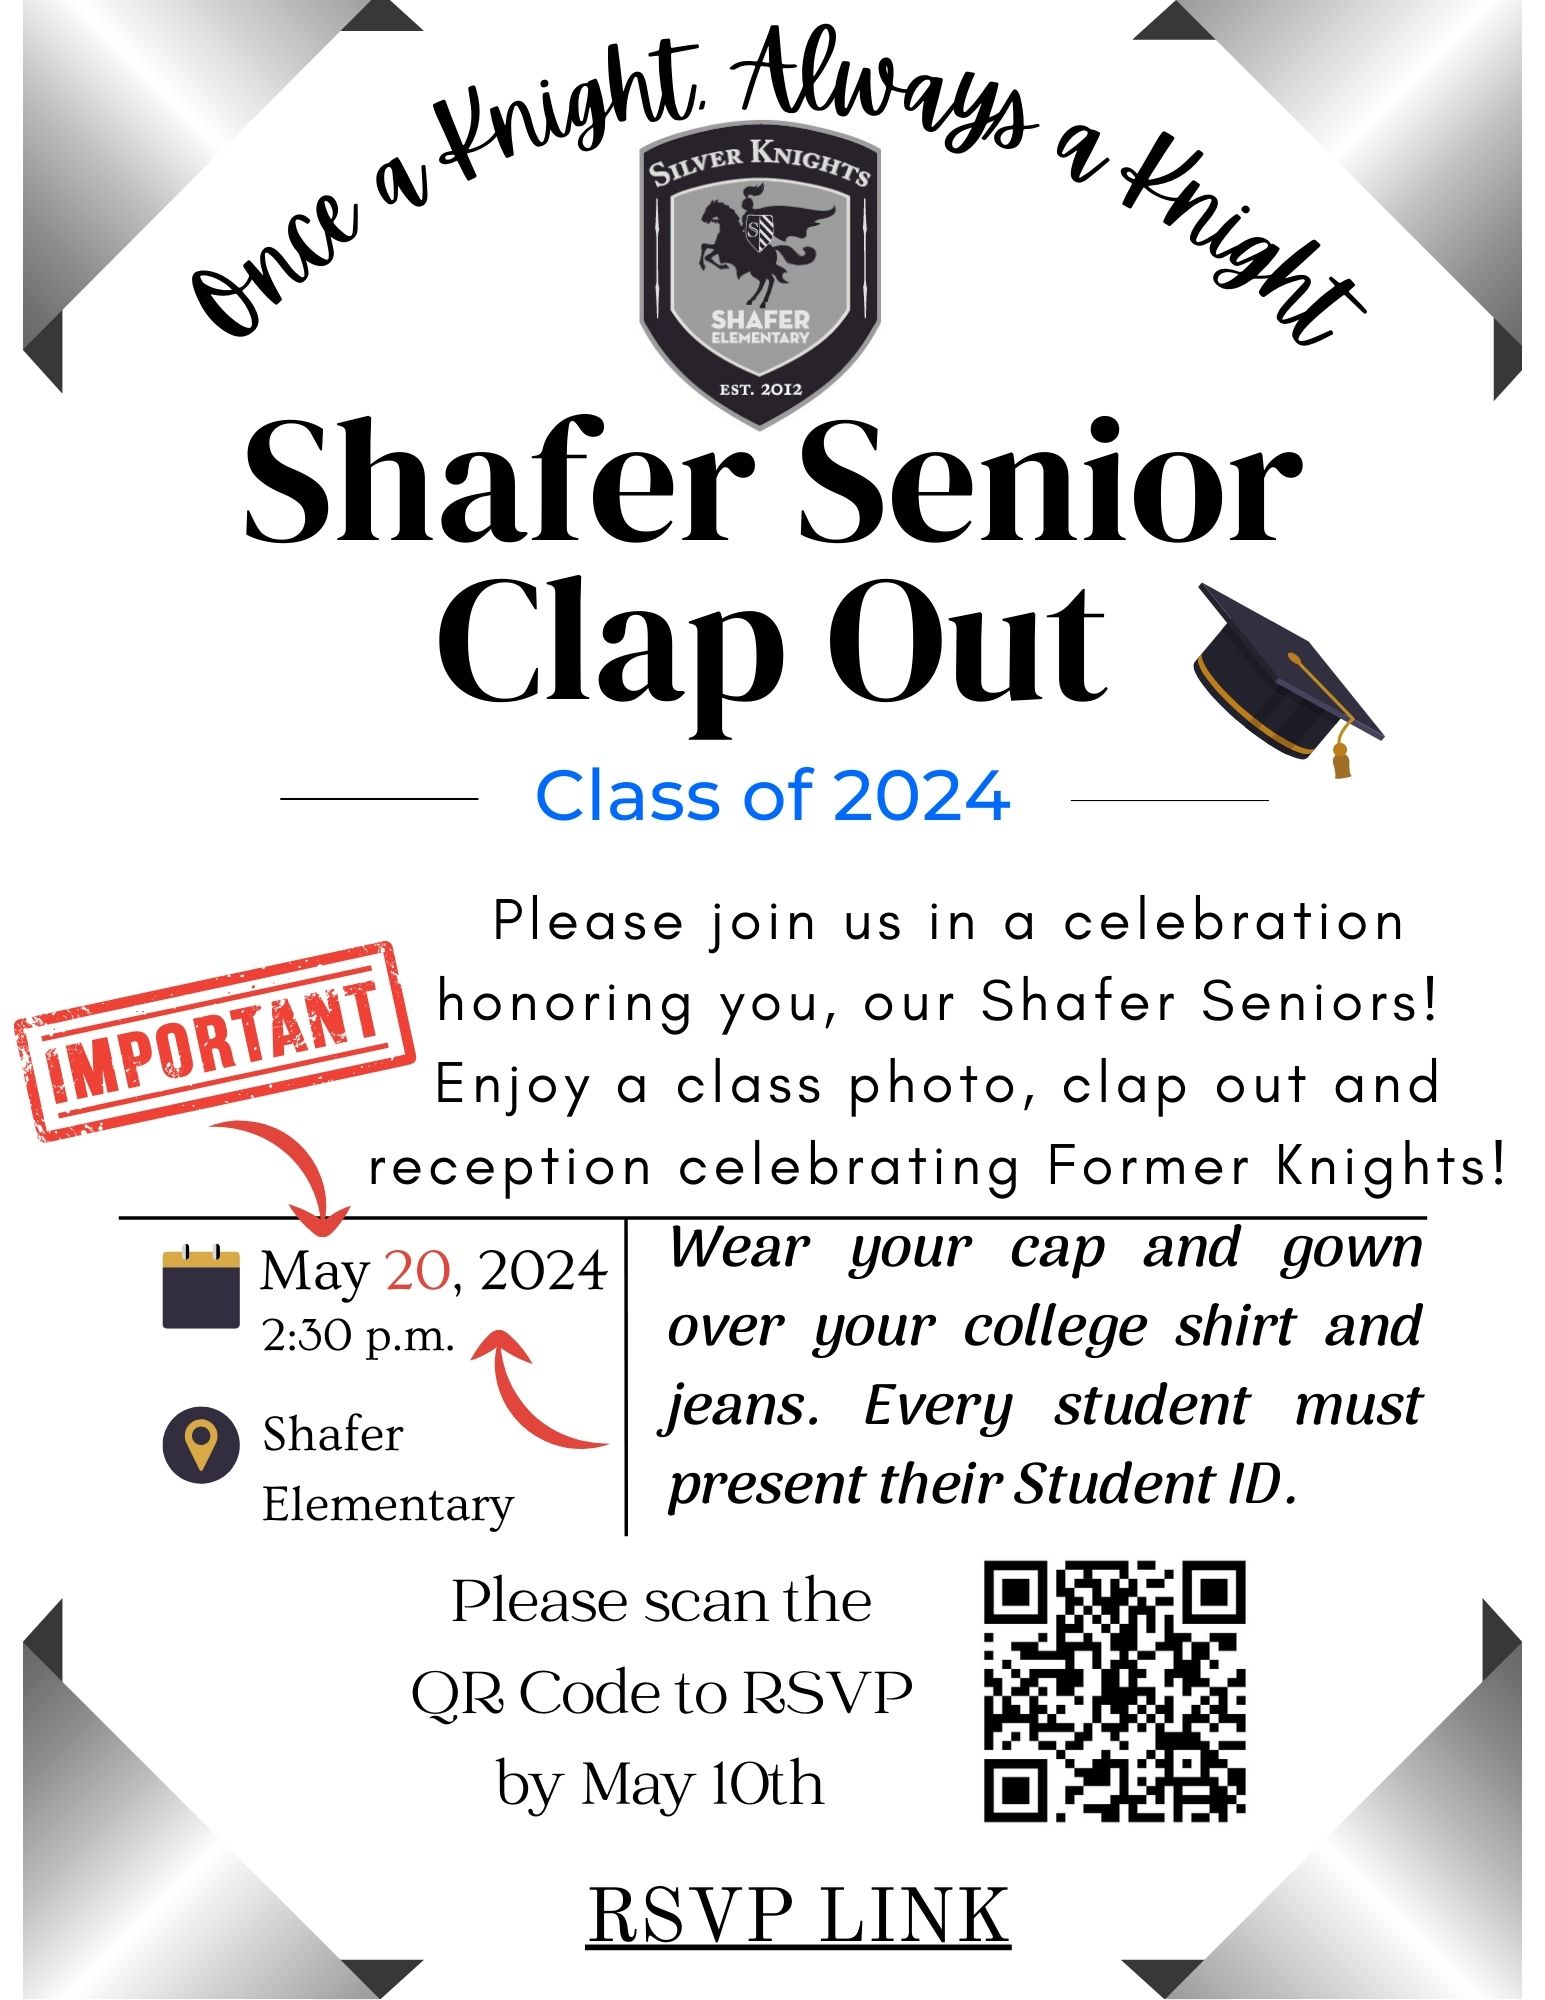 Shafer Senior Clap Out May 20, 2024 at 2:30